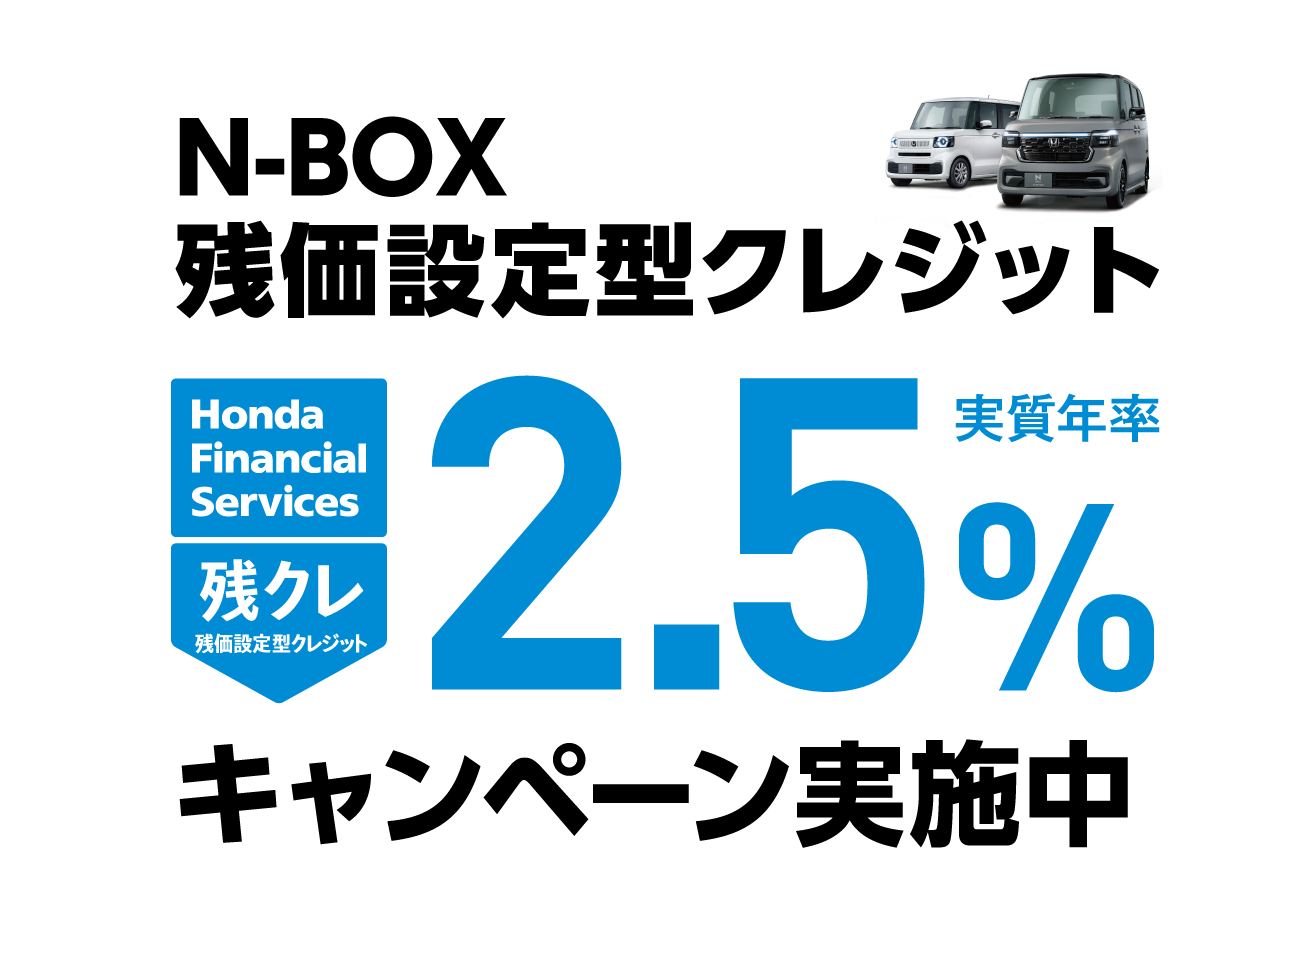 N-BOX 残価設定型クレジット 2.5%キャンペーン実施中